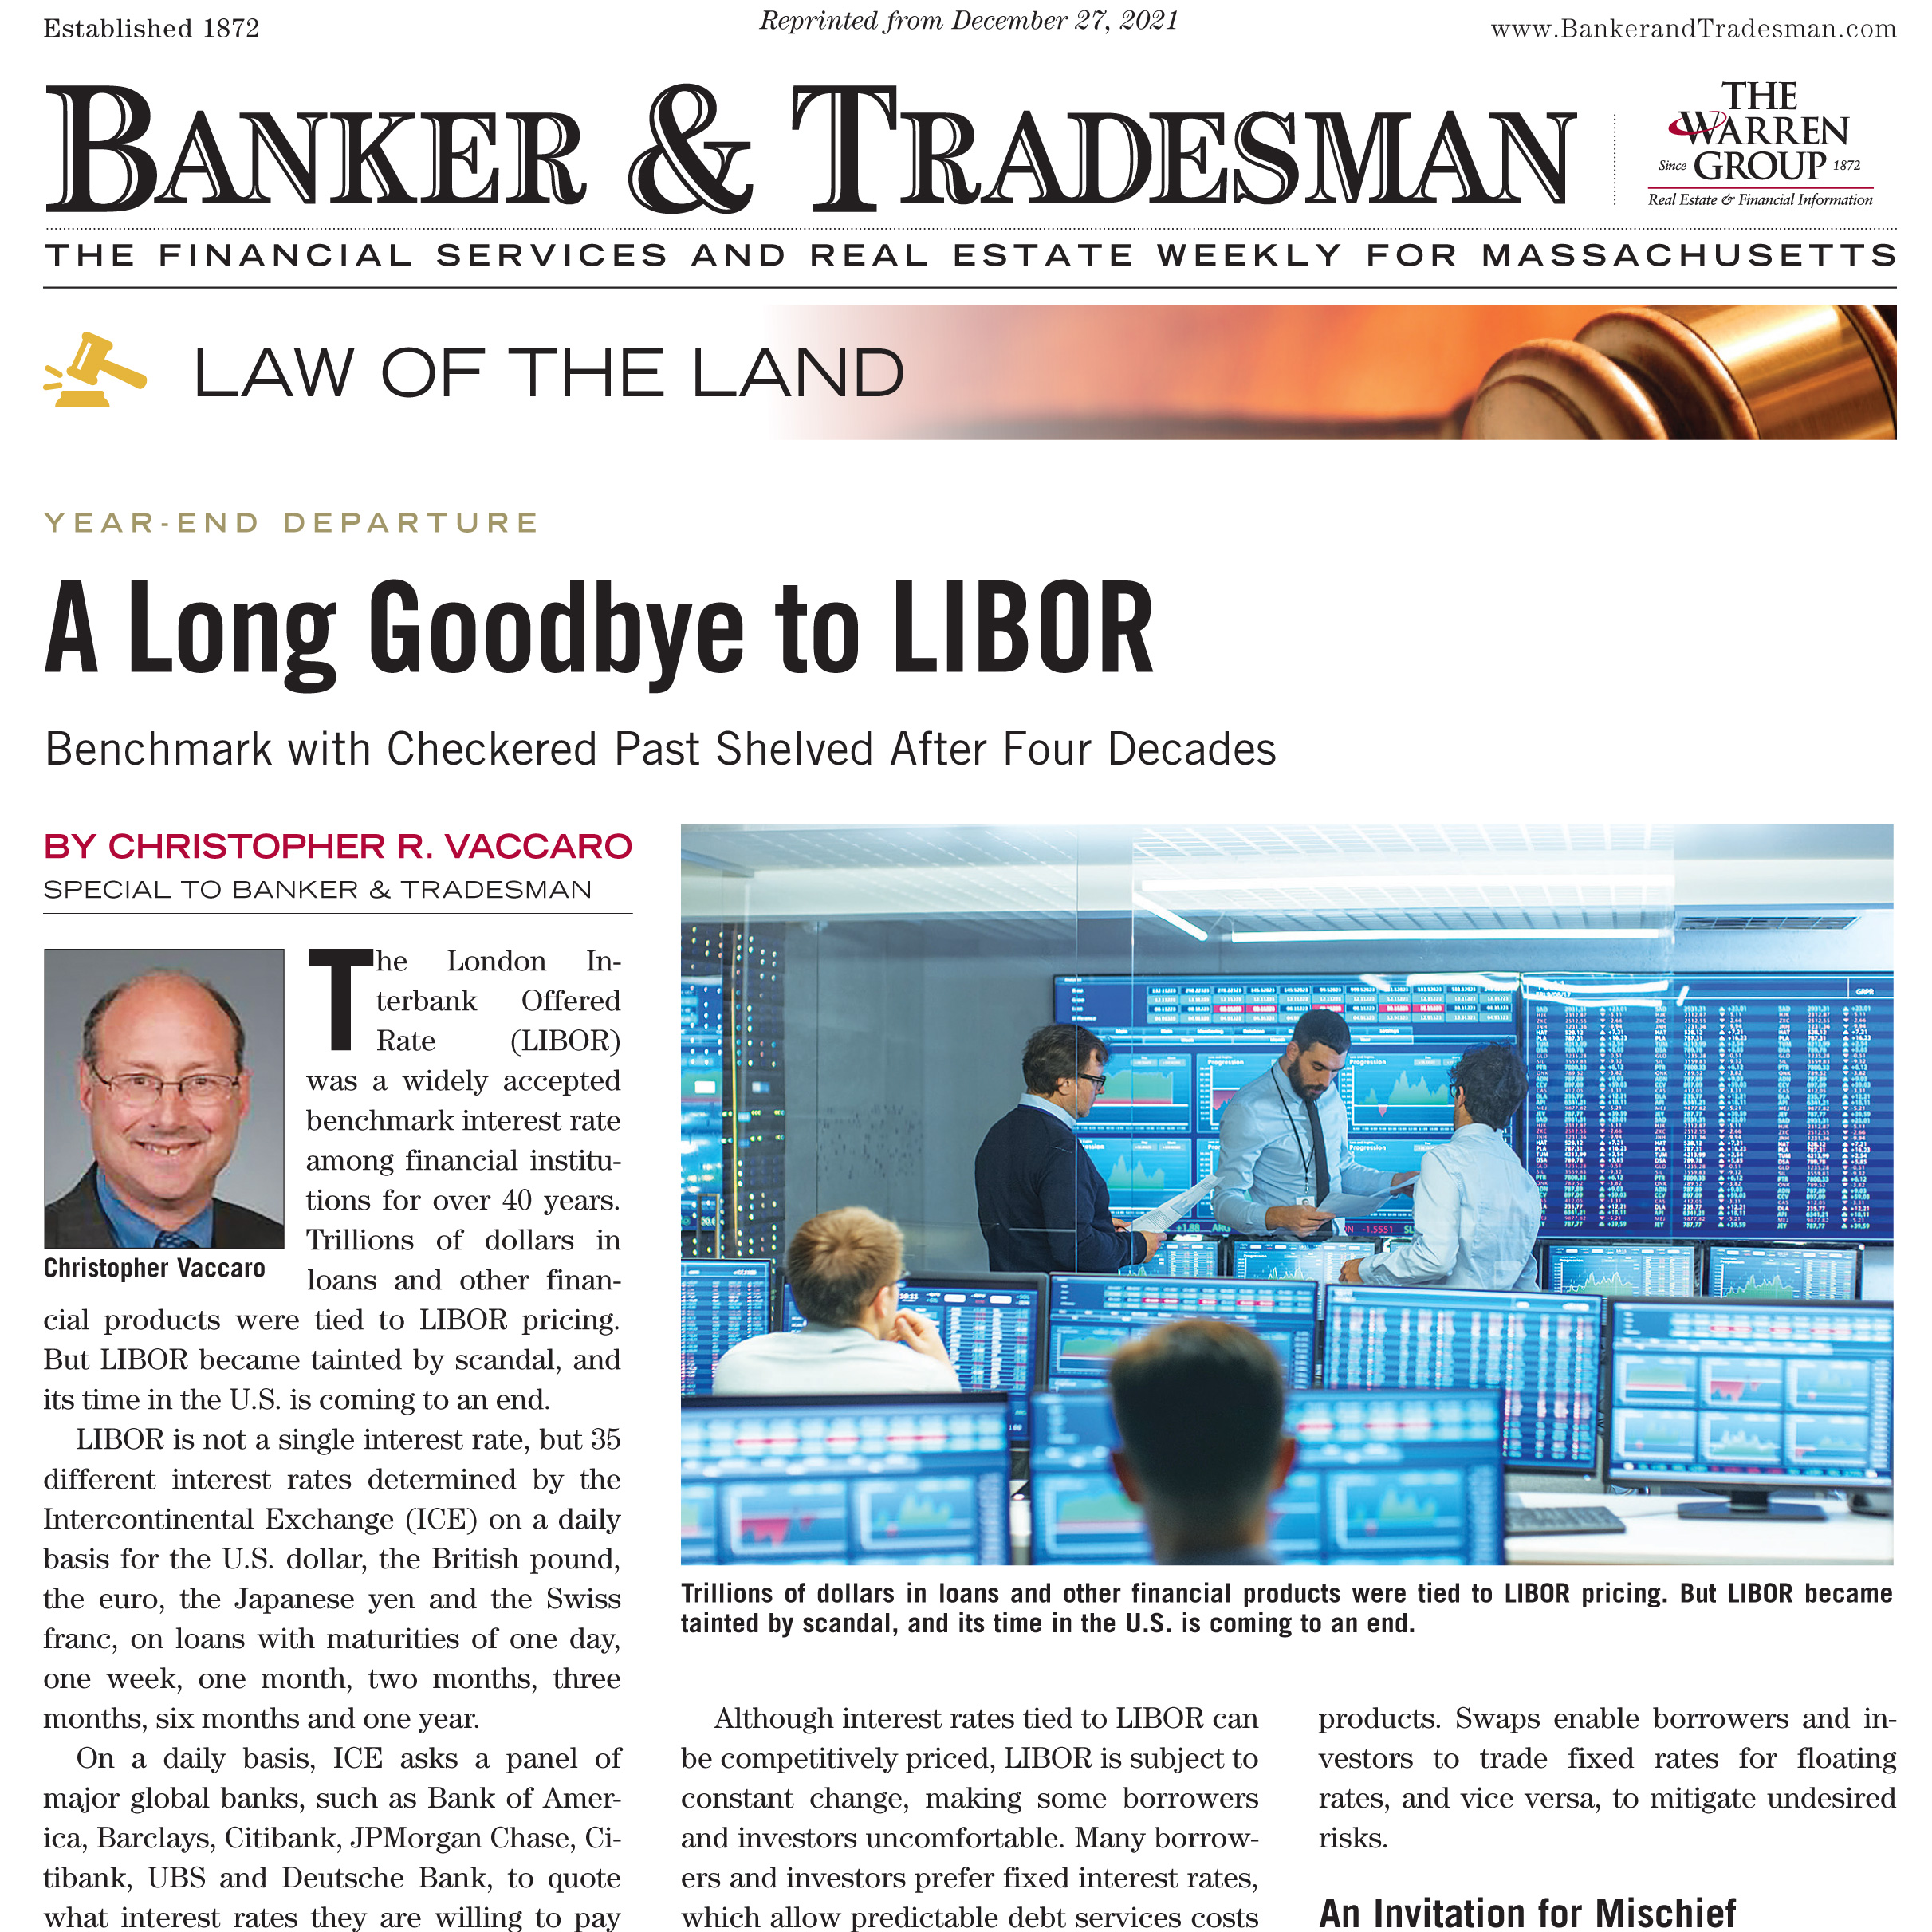 A Long Goodbye to LIBOR